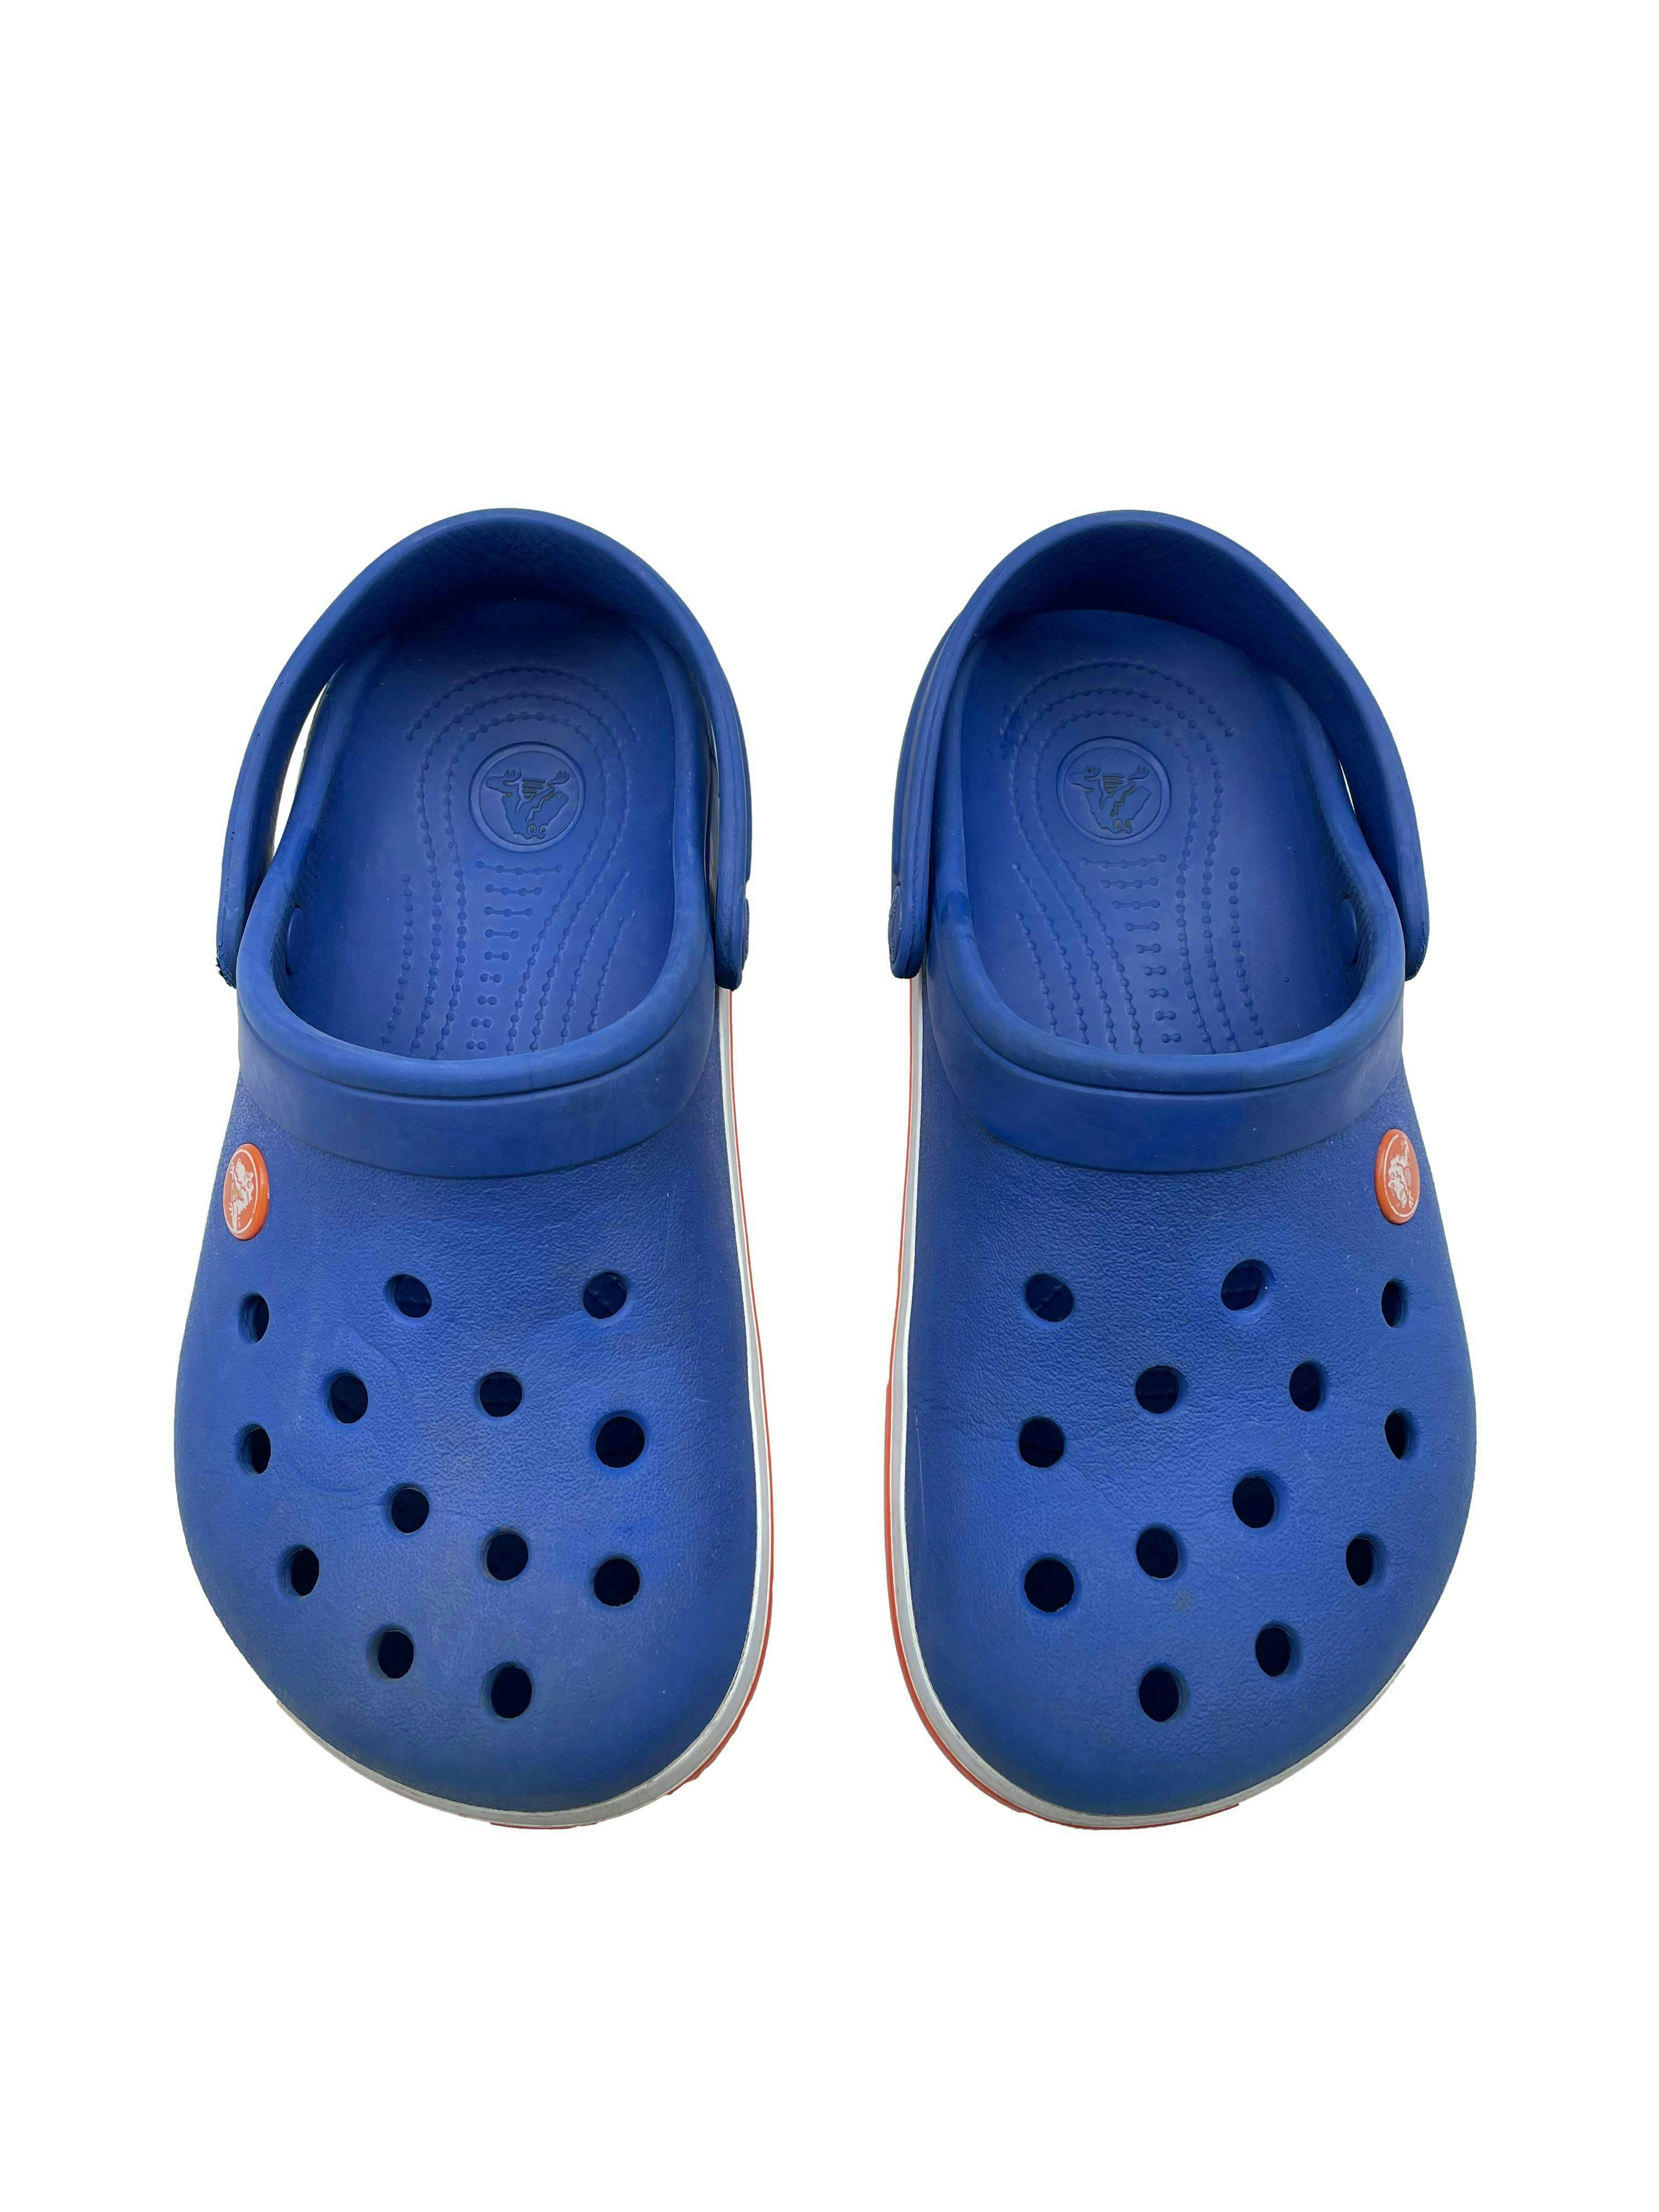 Crocs azules con franja blanca y línea anaranjada. Medida pie 21cm Talla J3